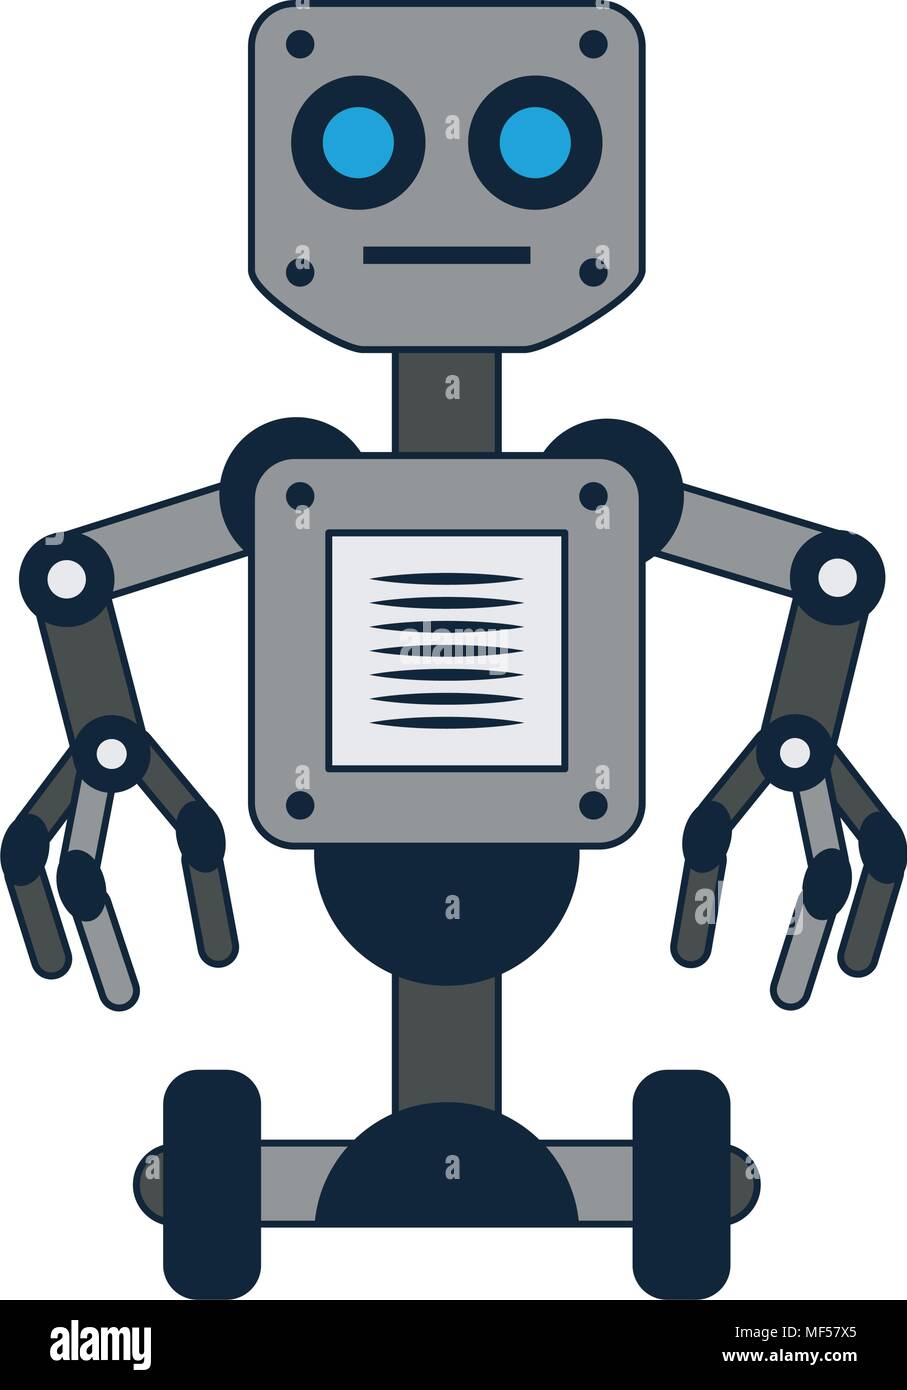 Tecnología Robot cartoon Imagen Vector de stock - Alamy